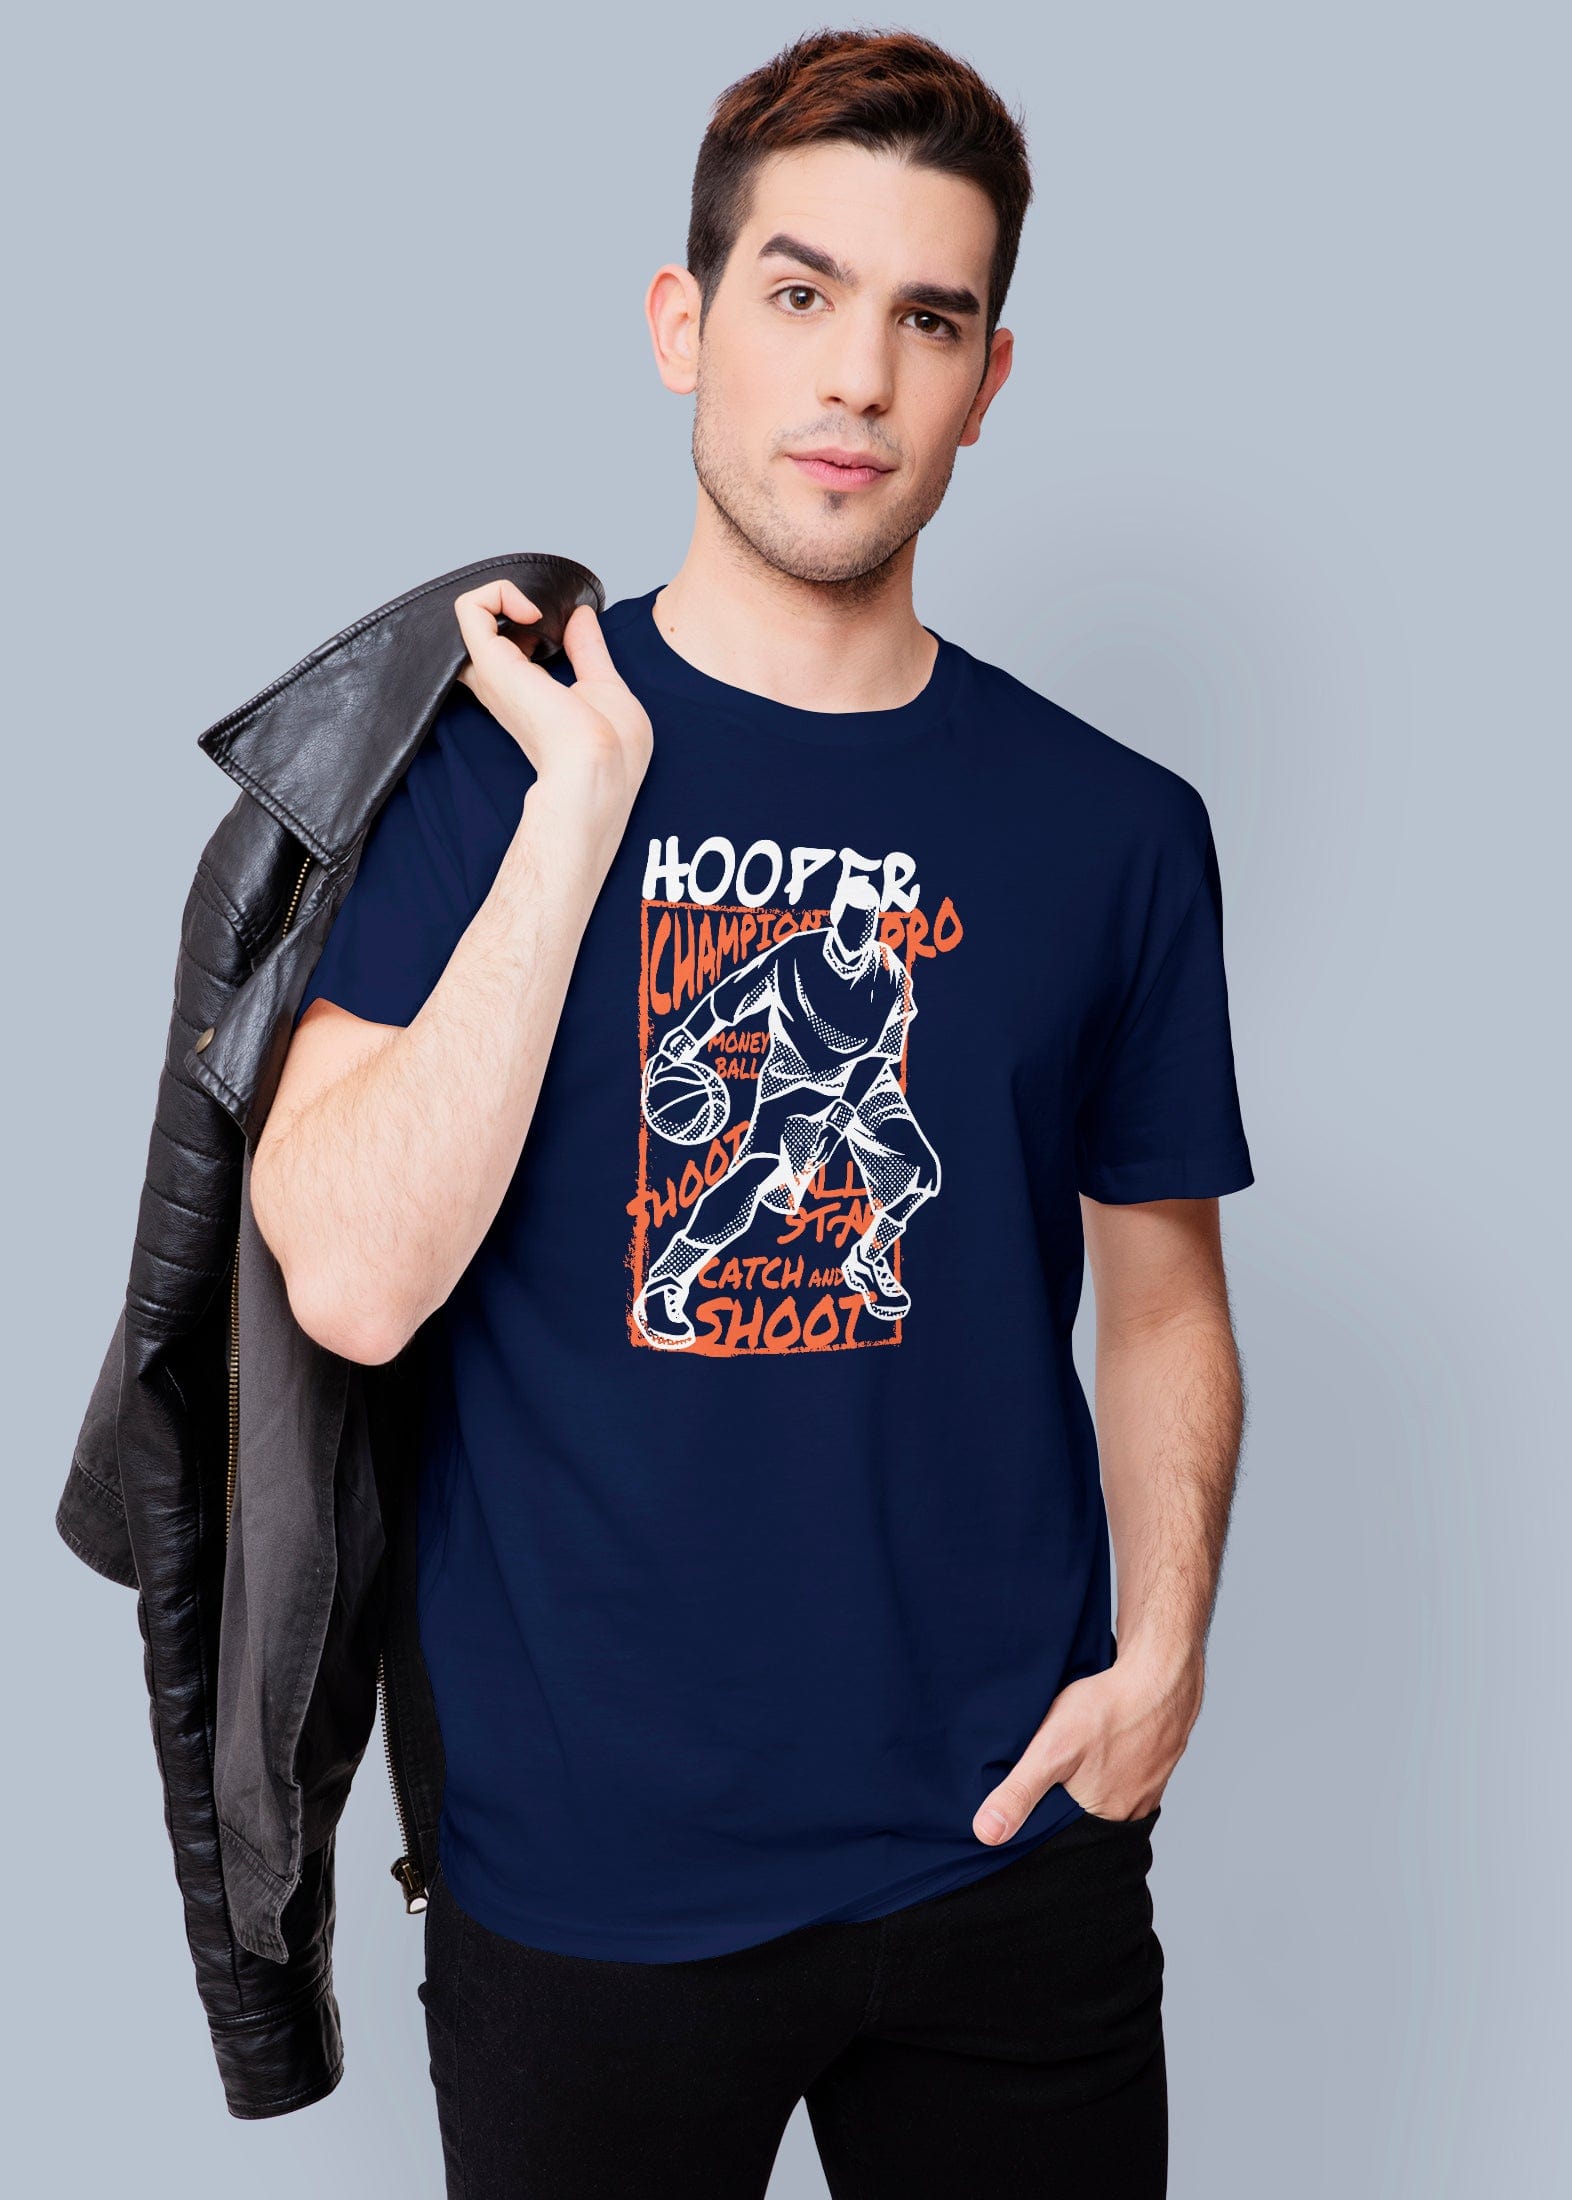 Hooper Champion Printed Half Sleeve Premium Cotton T-shirt For Men